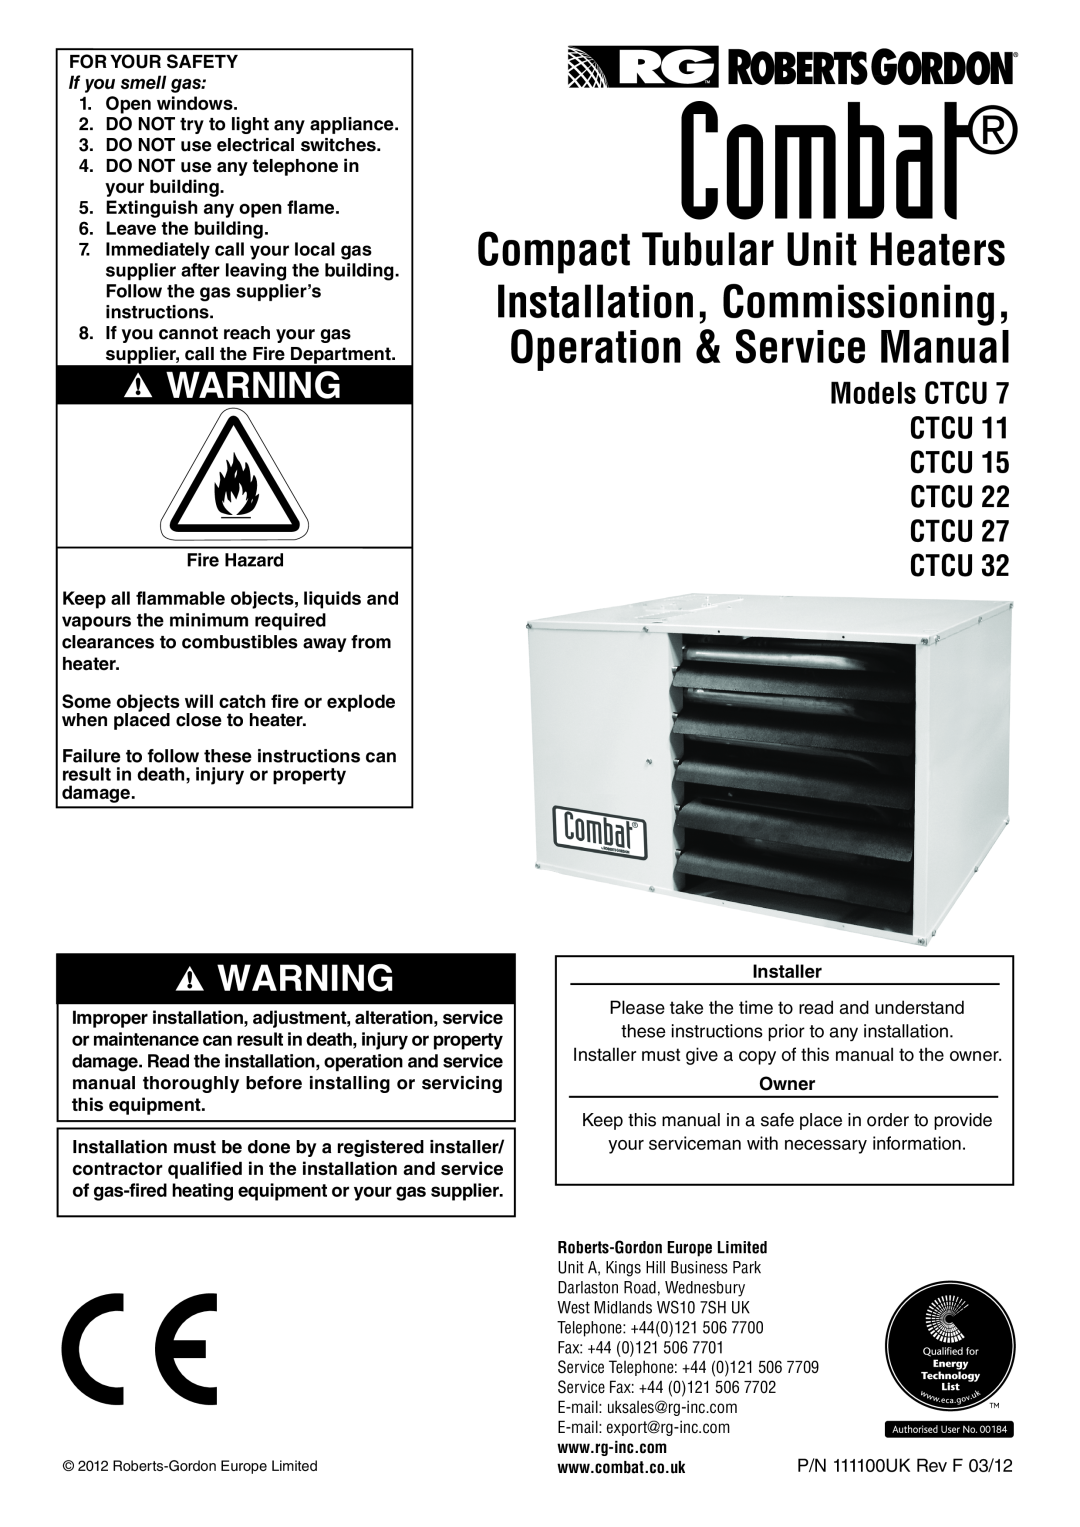 Roberts Gorden service manual mbat, Installation, Commissioning, Compact Tubular Unit Heaters, Models CTCU, Ctcu 